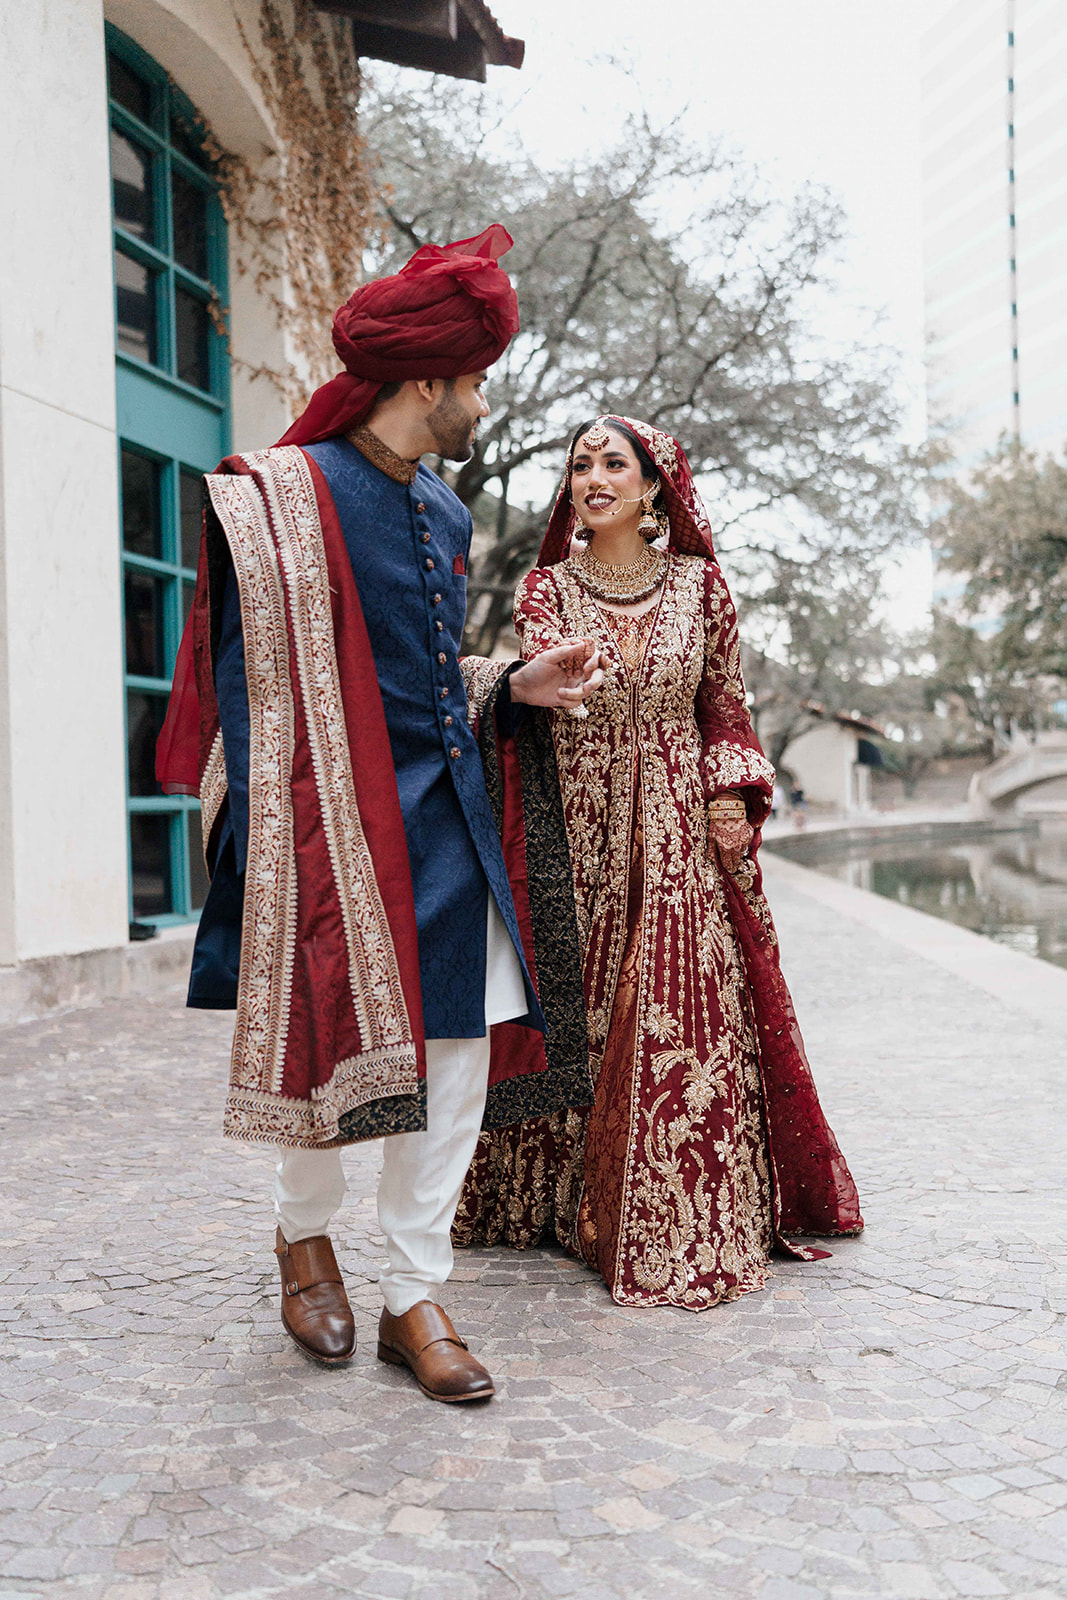 desi pakistani couple on wedding day